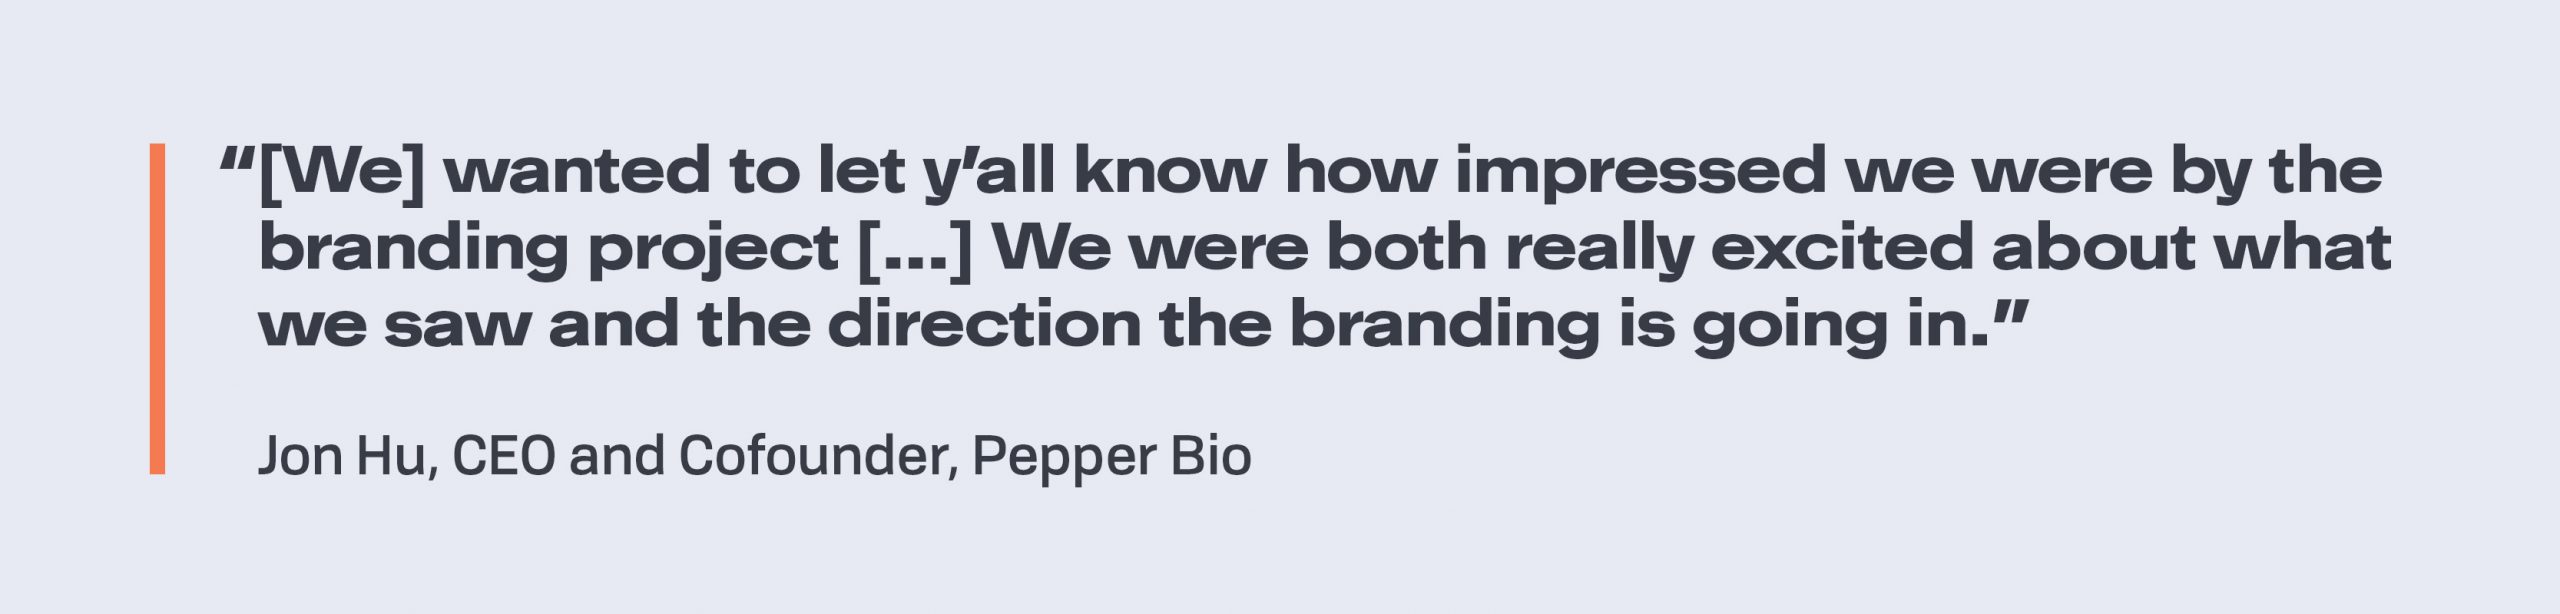 Pepper Bio quote from CEO, Jon Hu